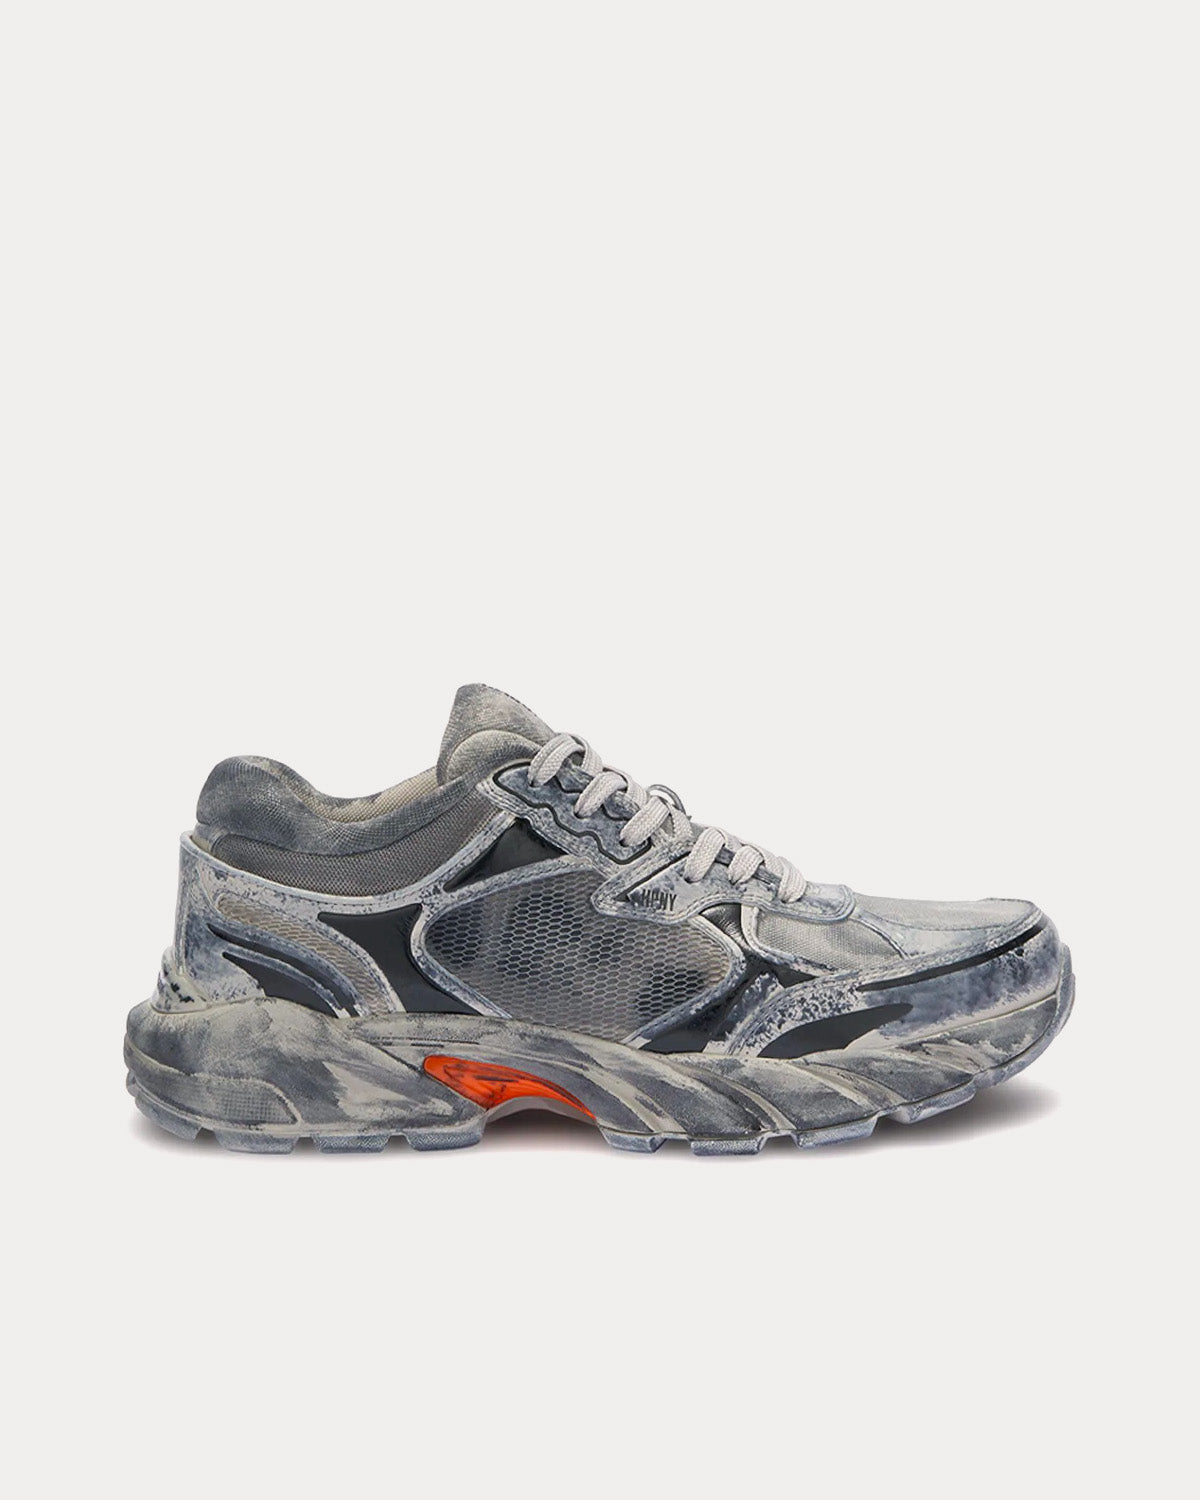 Heron Preston - Block Stepper Worn Leather Dark Grey Low Top Sneakers